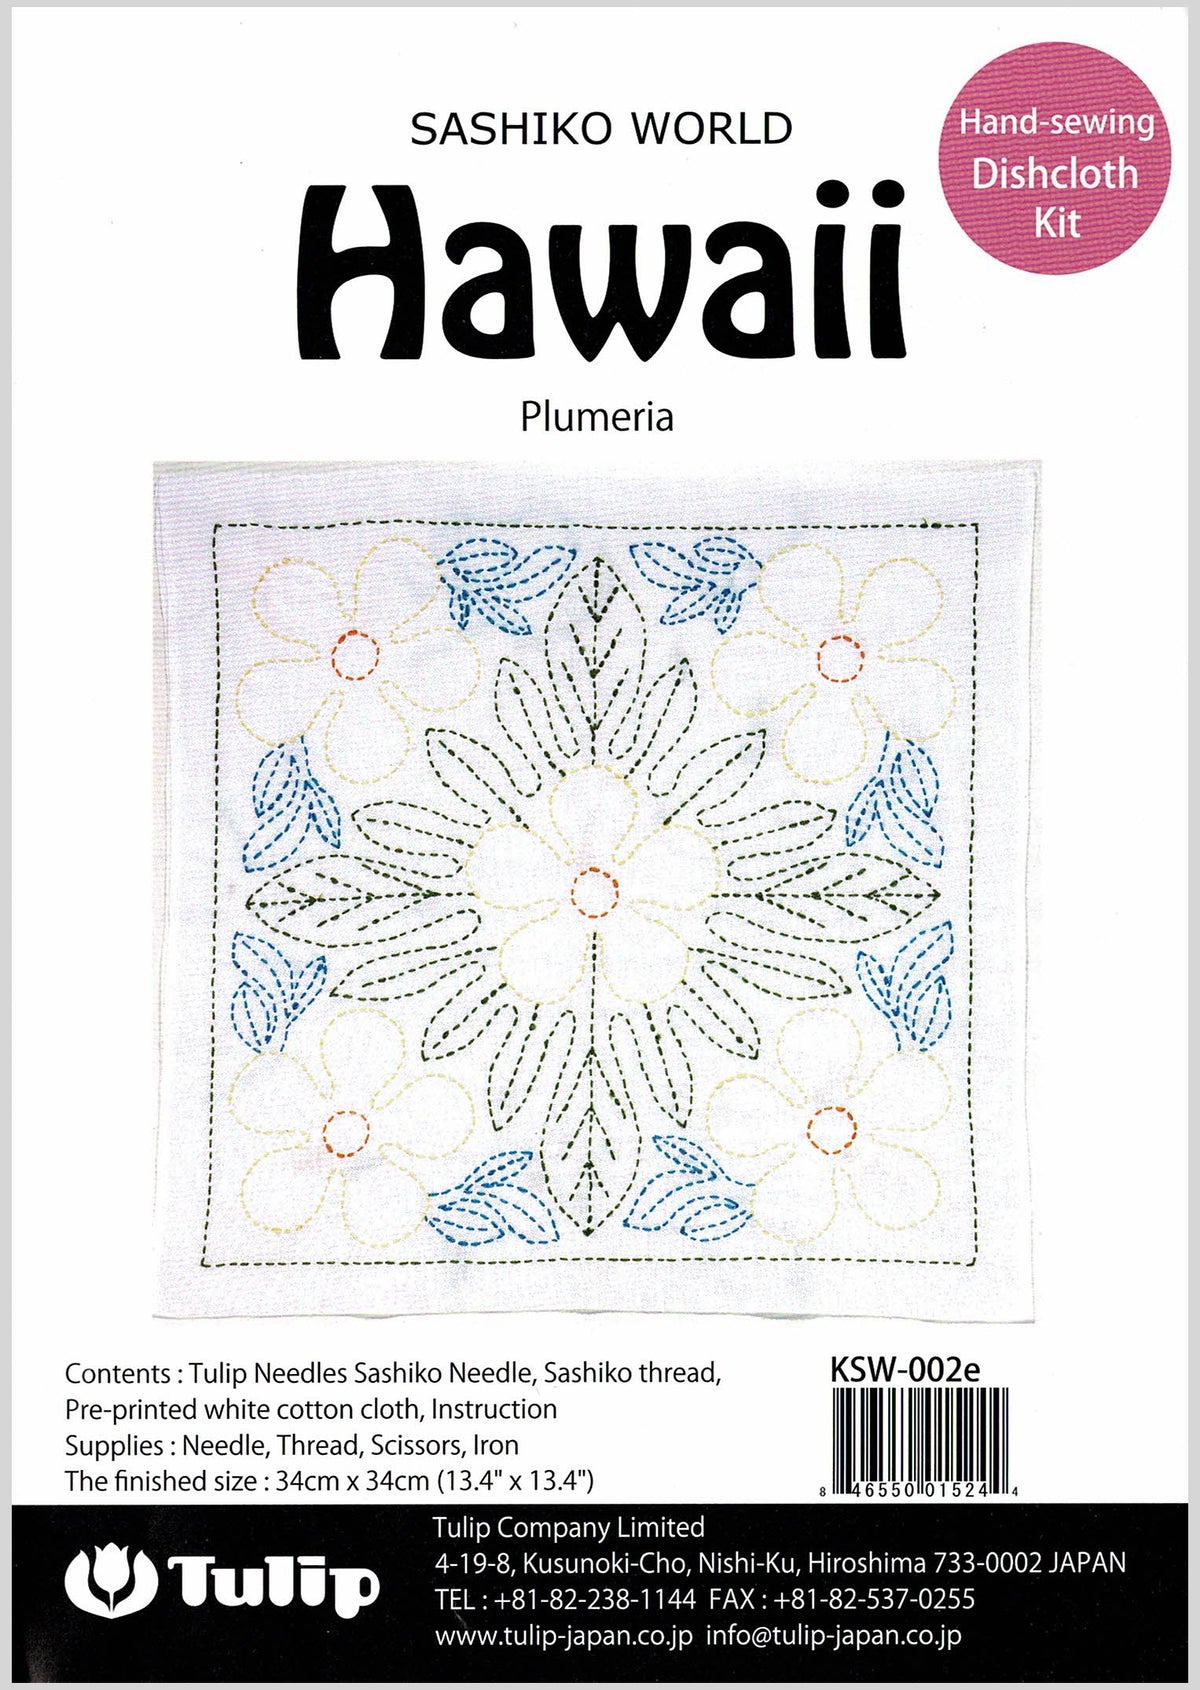 Sashiko World Embroidery Kit - Hawaii Plumeria